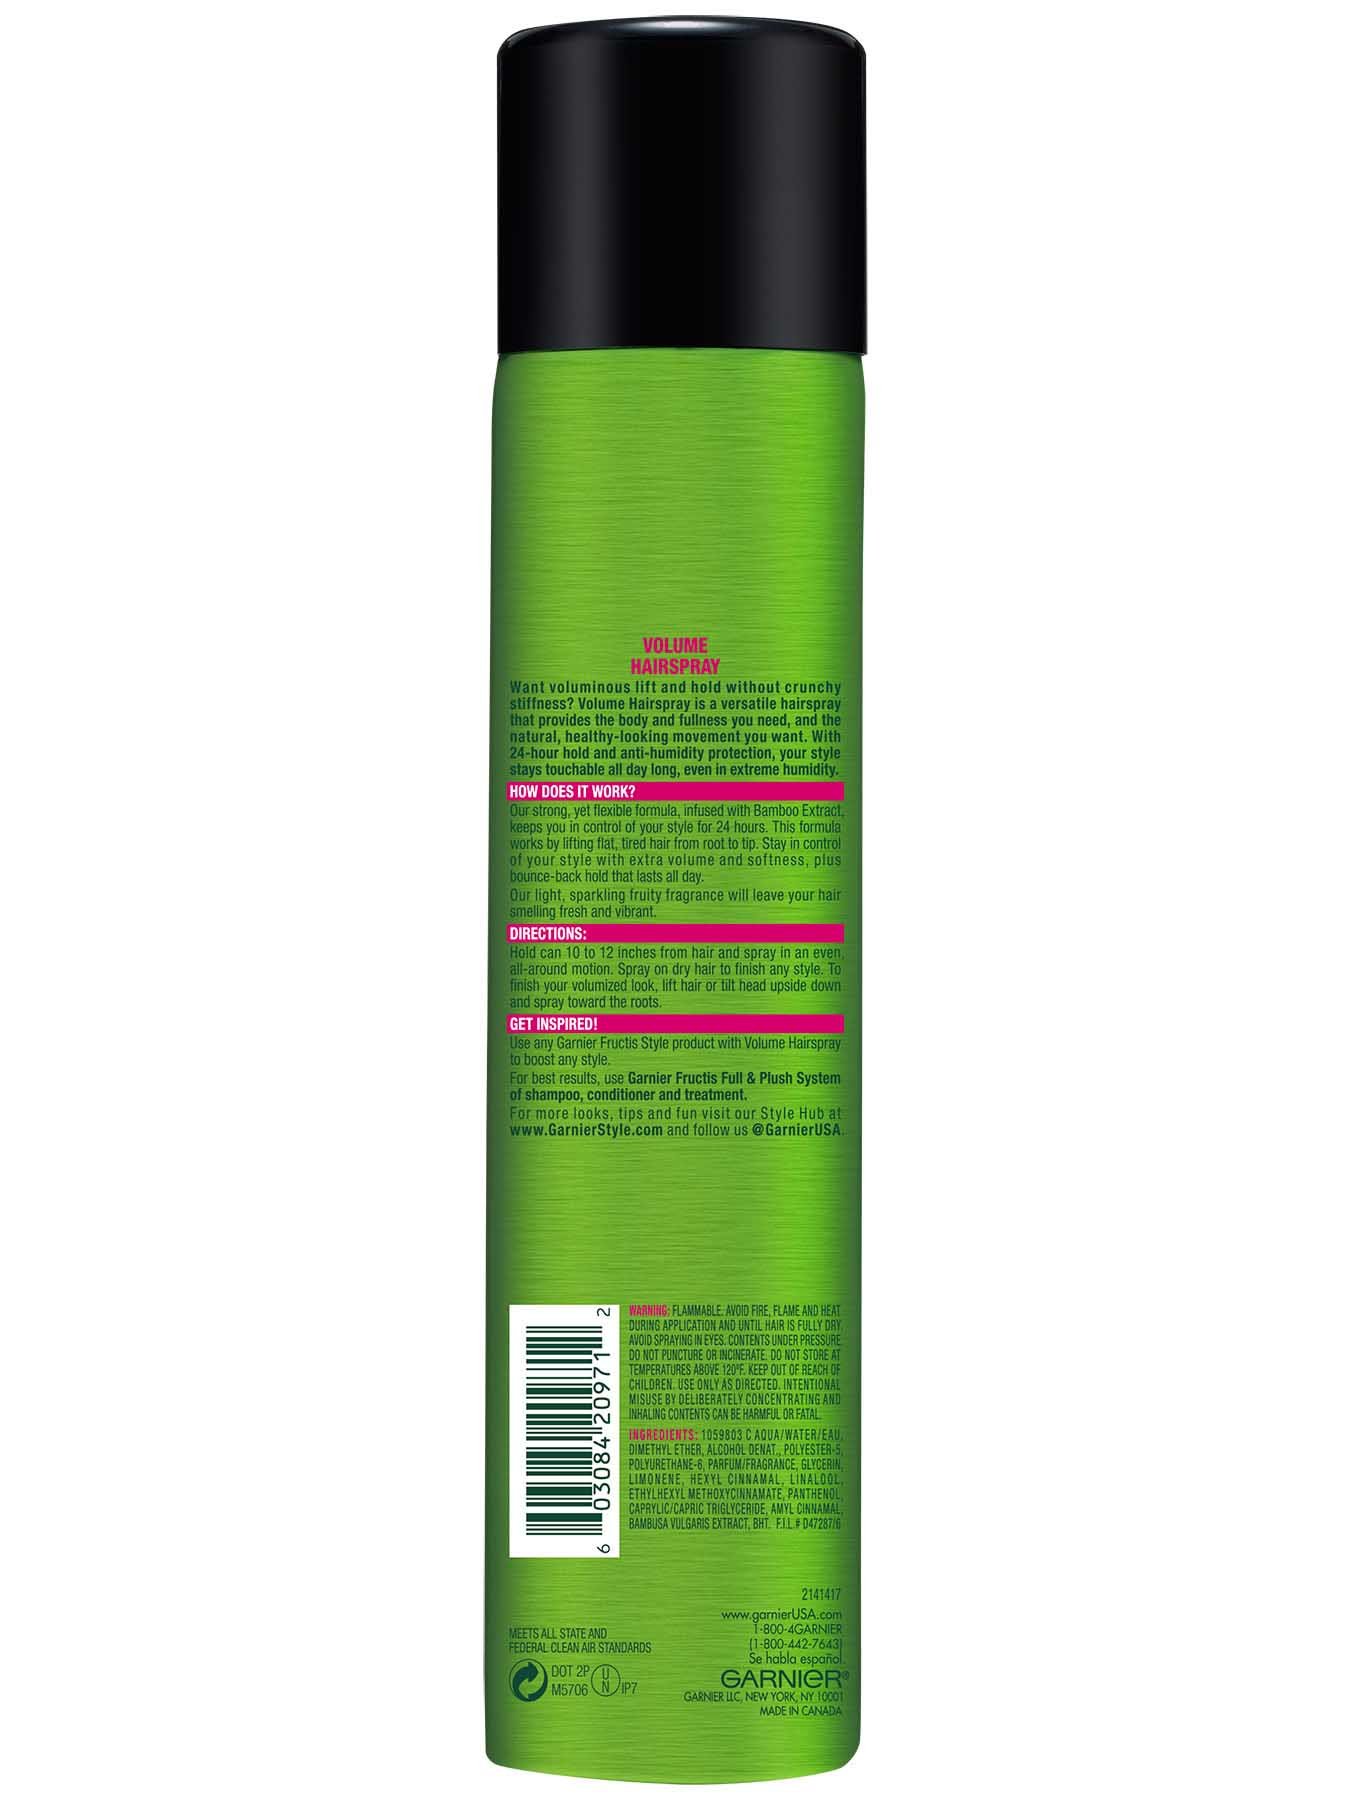 Back view of Volume Anti-Humidity Aerosol Hairspray.